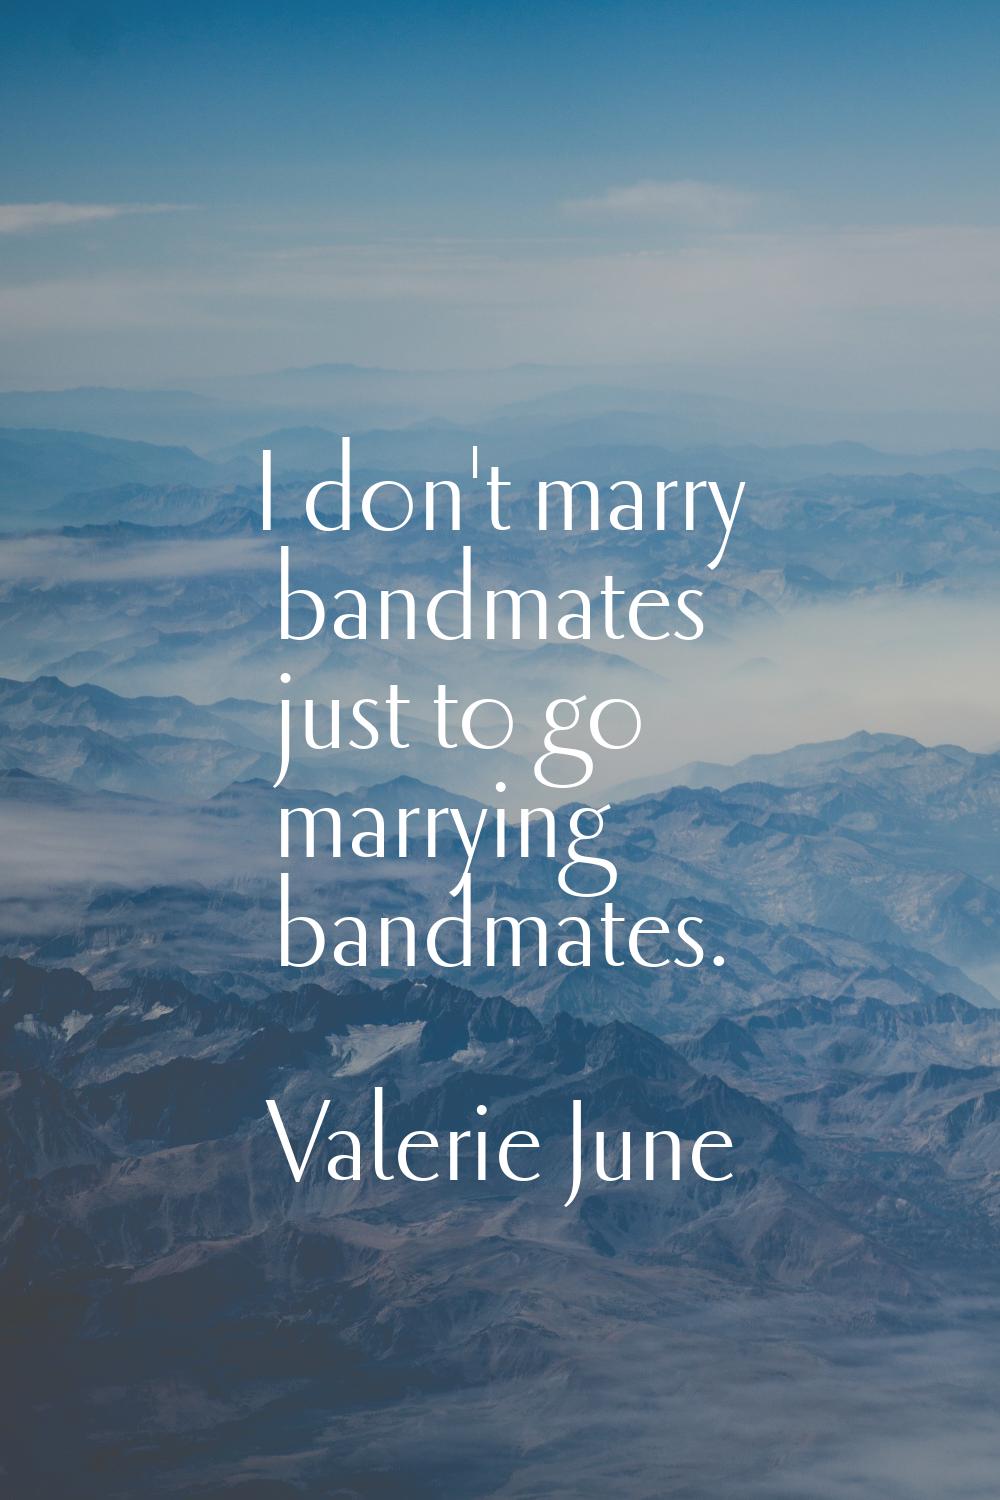 I don't marry bandmates just to go marrying bandmates.